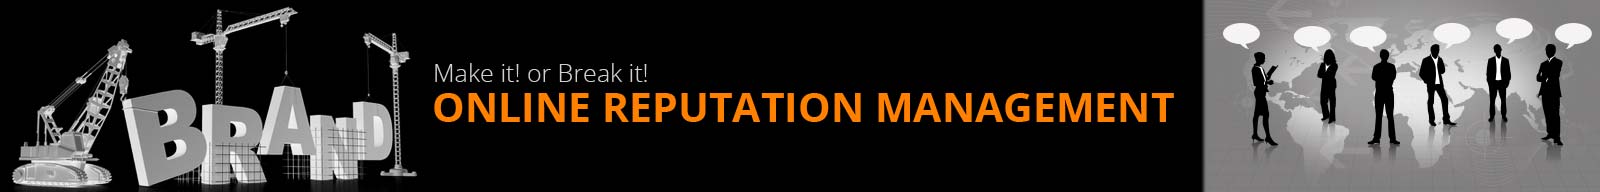 Online Reputation Management (ORM) Services : iMz Media Solutions